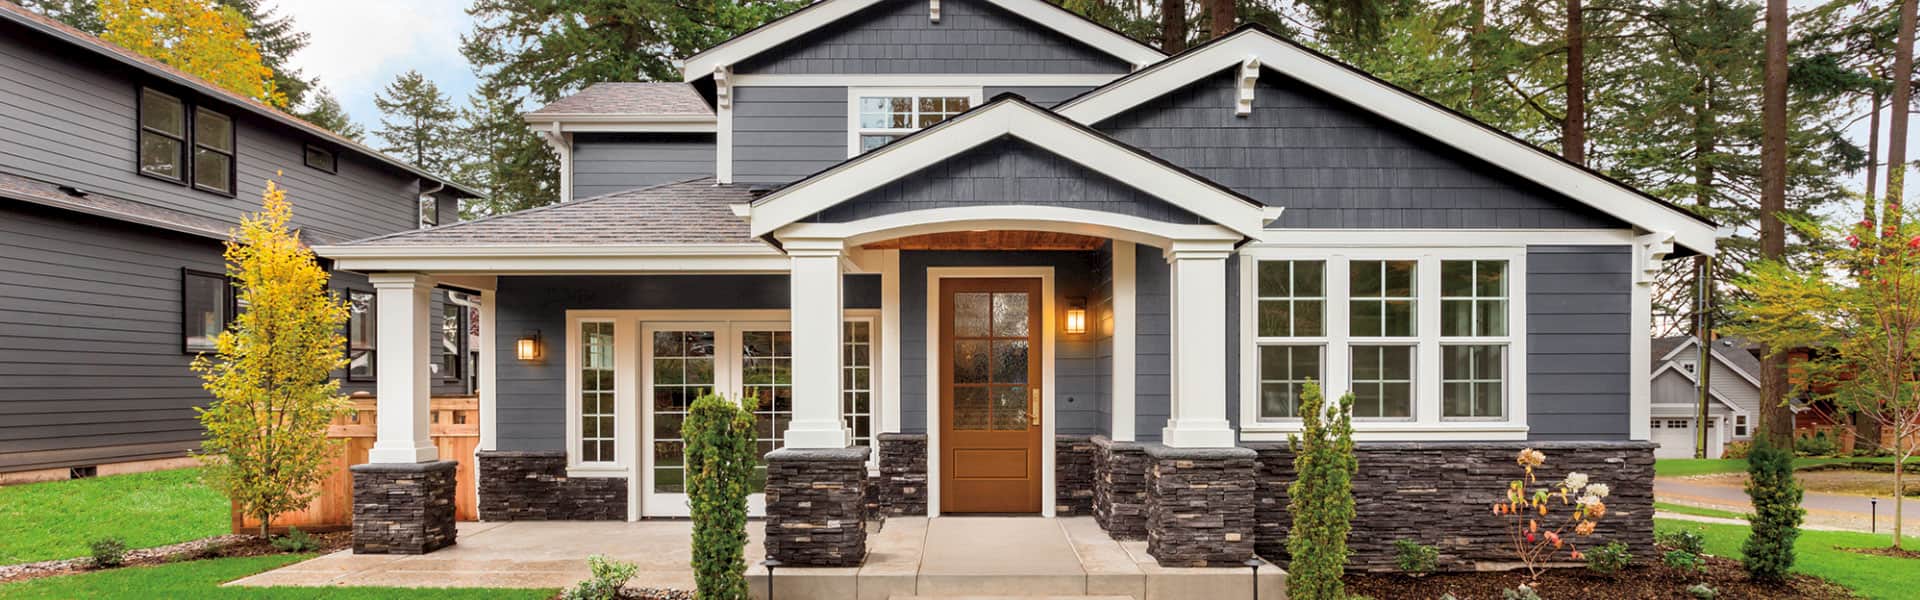 traditional home exterior with a new fiberglass half-light entry door